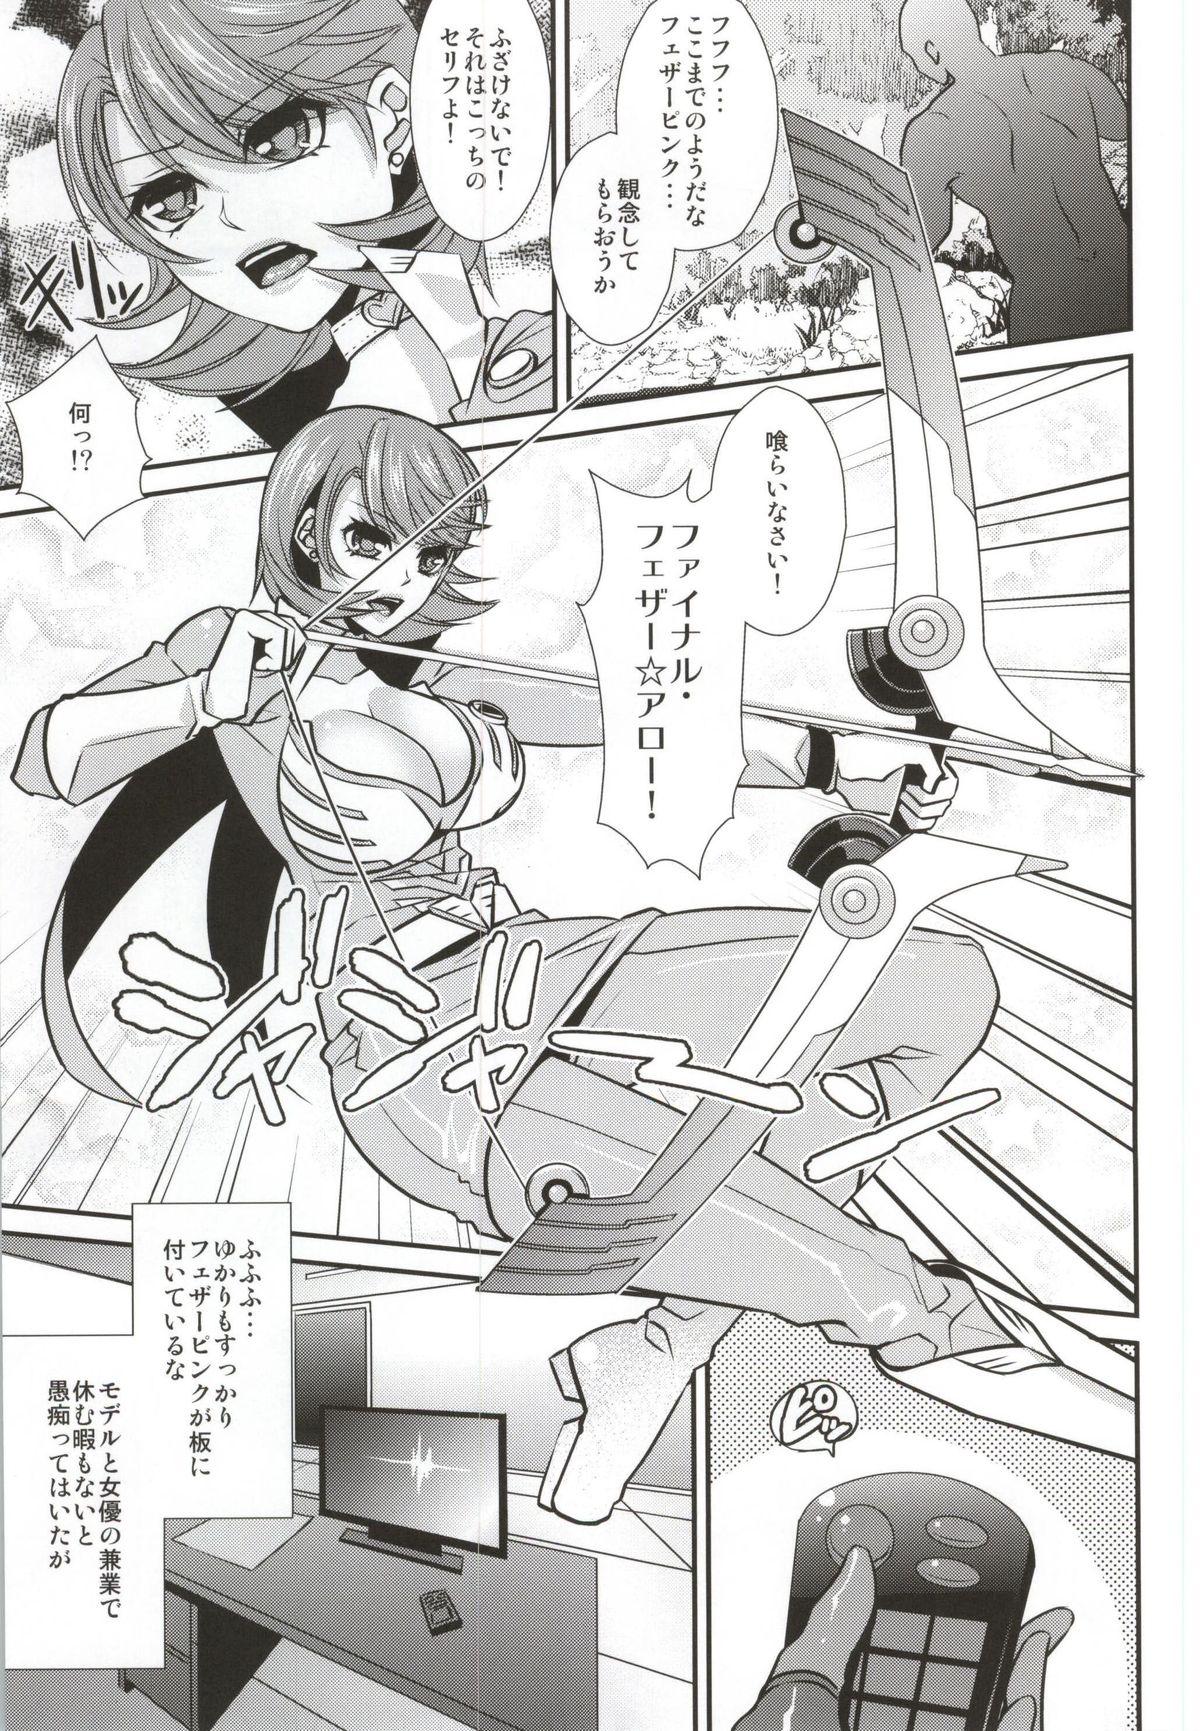 Teamskeet Futari Ochi - Persona 3 High Heels - Page 2